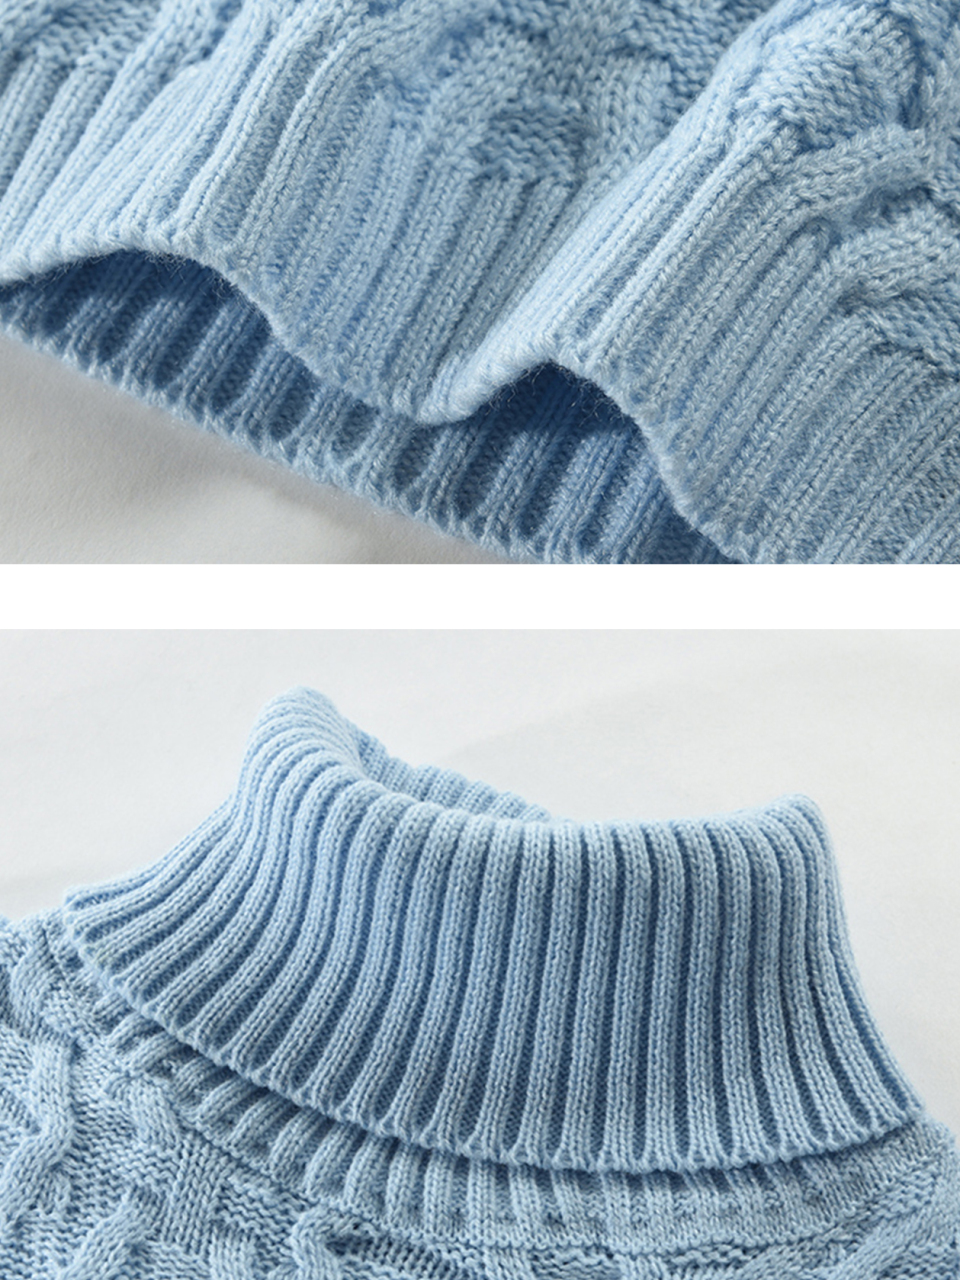 Men's Fashion Versatile Knit Turtleneck Sweater